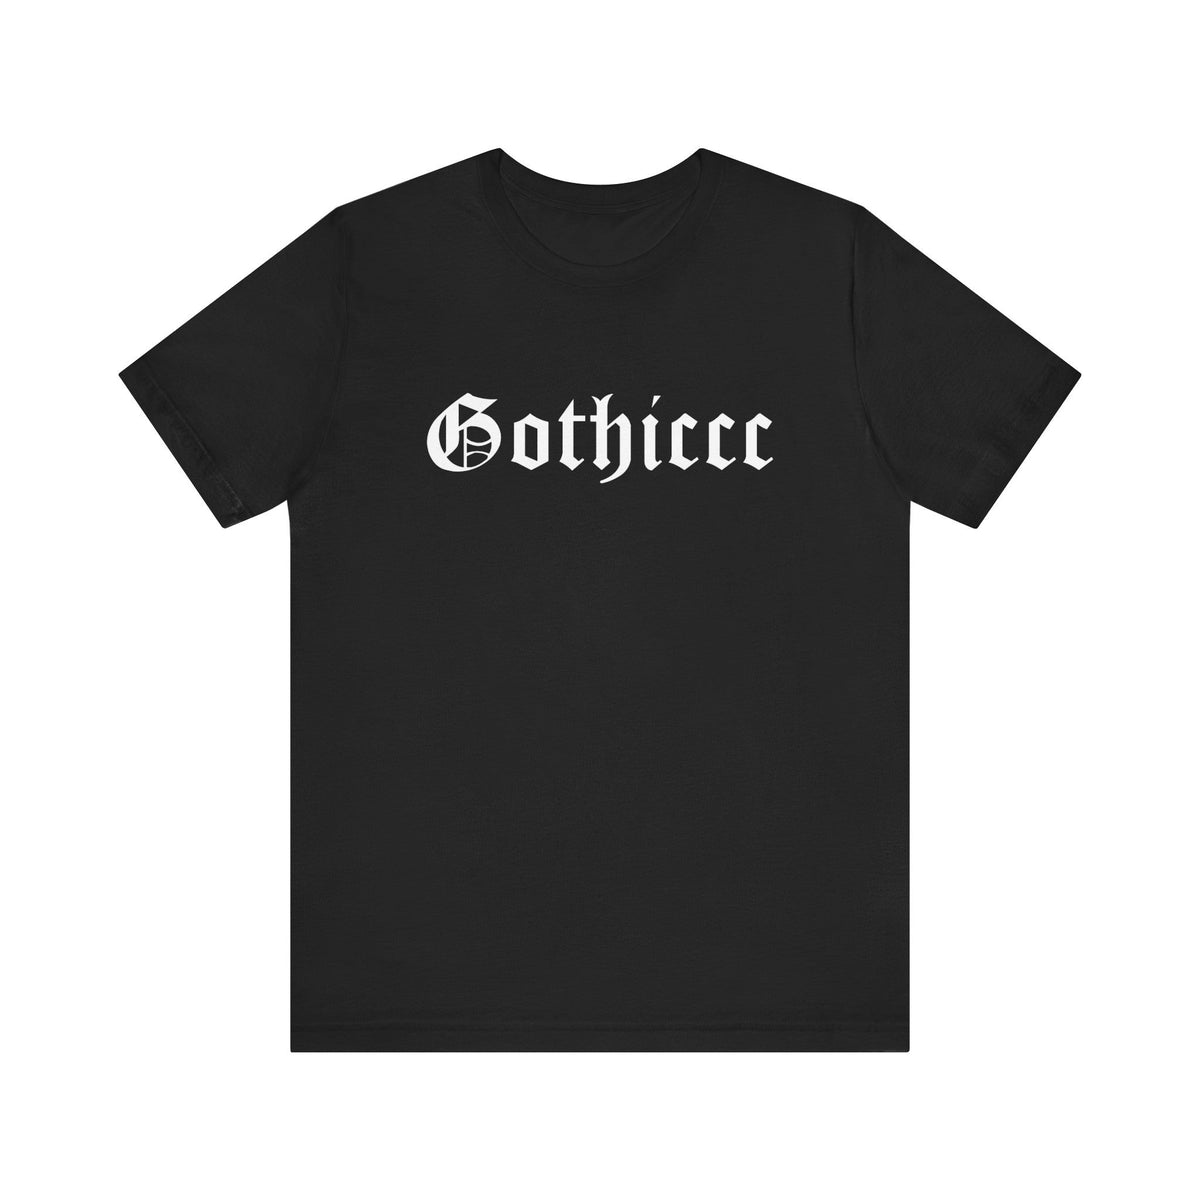 Gothiccc Large Font T - Shirt - Goth Cloth Co.T - Shirt72643356581295782453